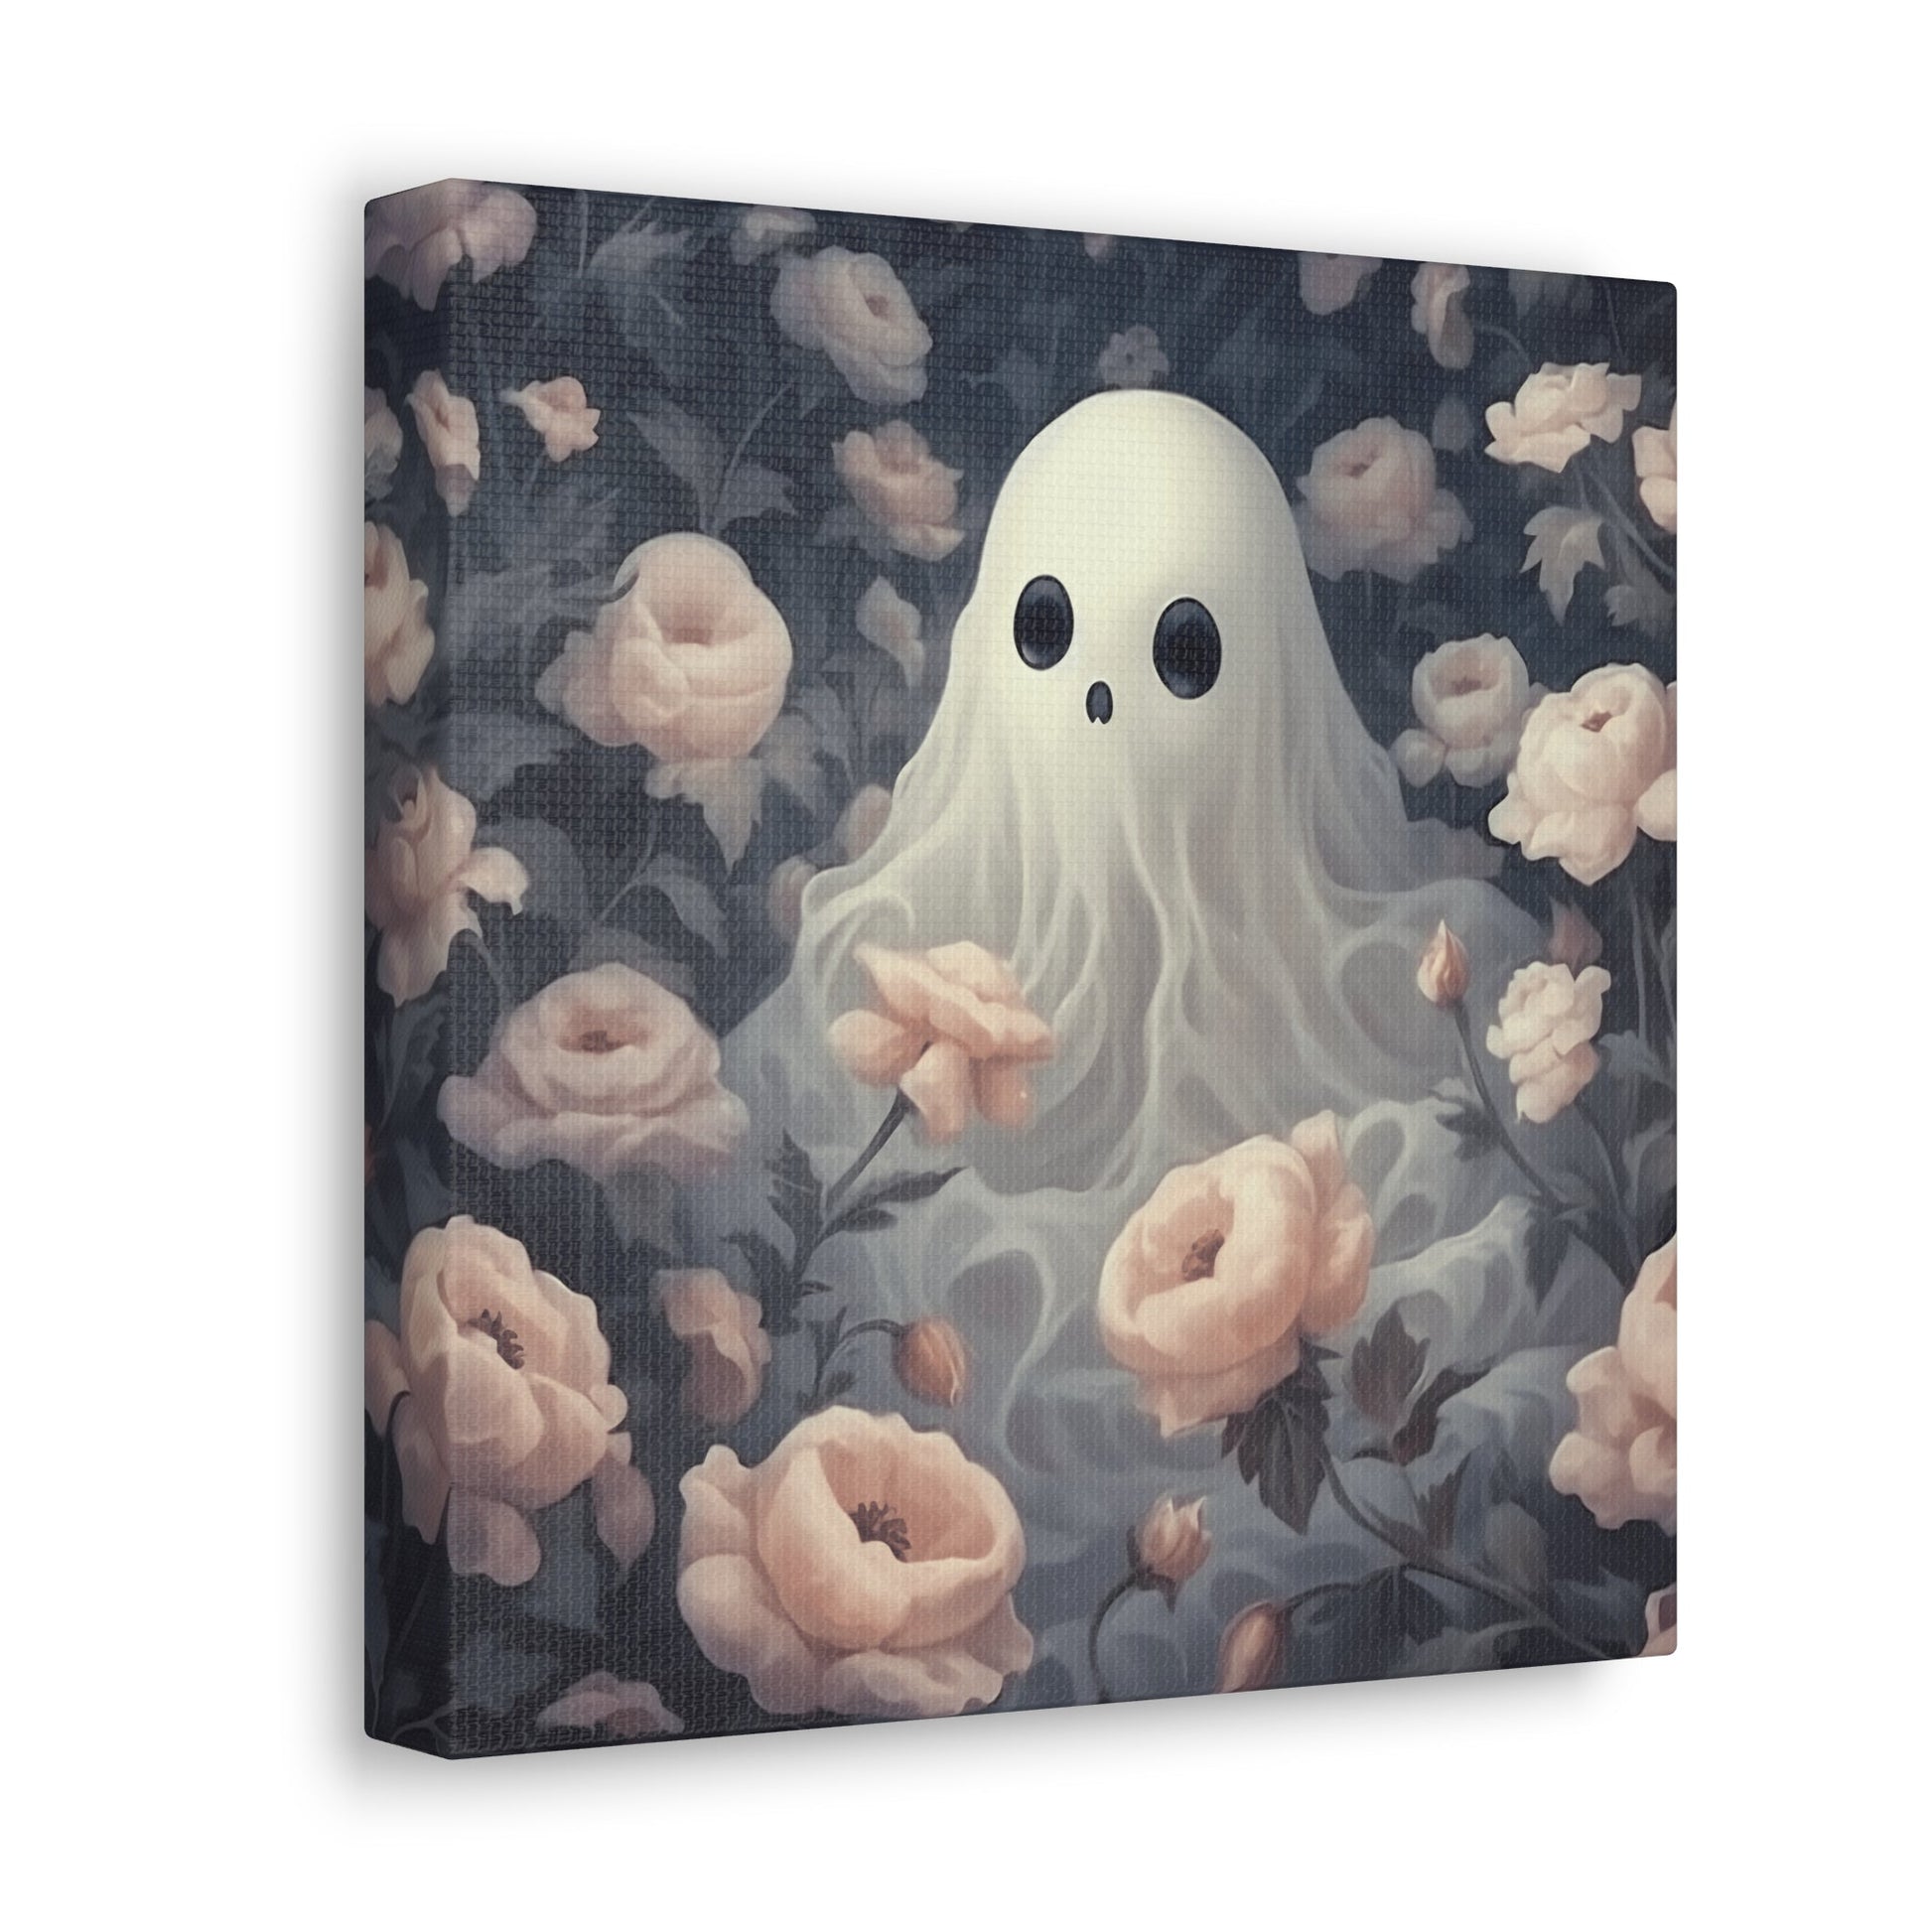 Cute Ghost in Rose Garden Canvas Gallery WrapCanvasVTZdesigns10″ x 10″1.25"Art & Wall DecorCanvasFall Picks